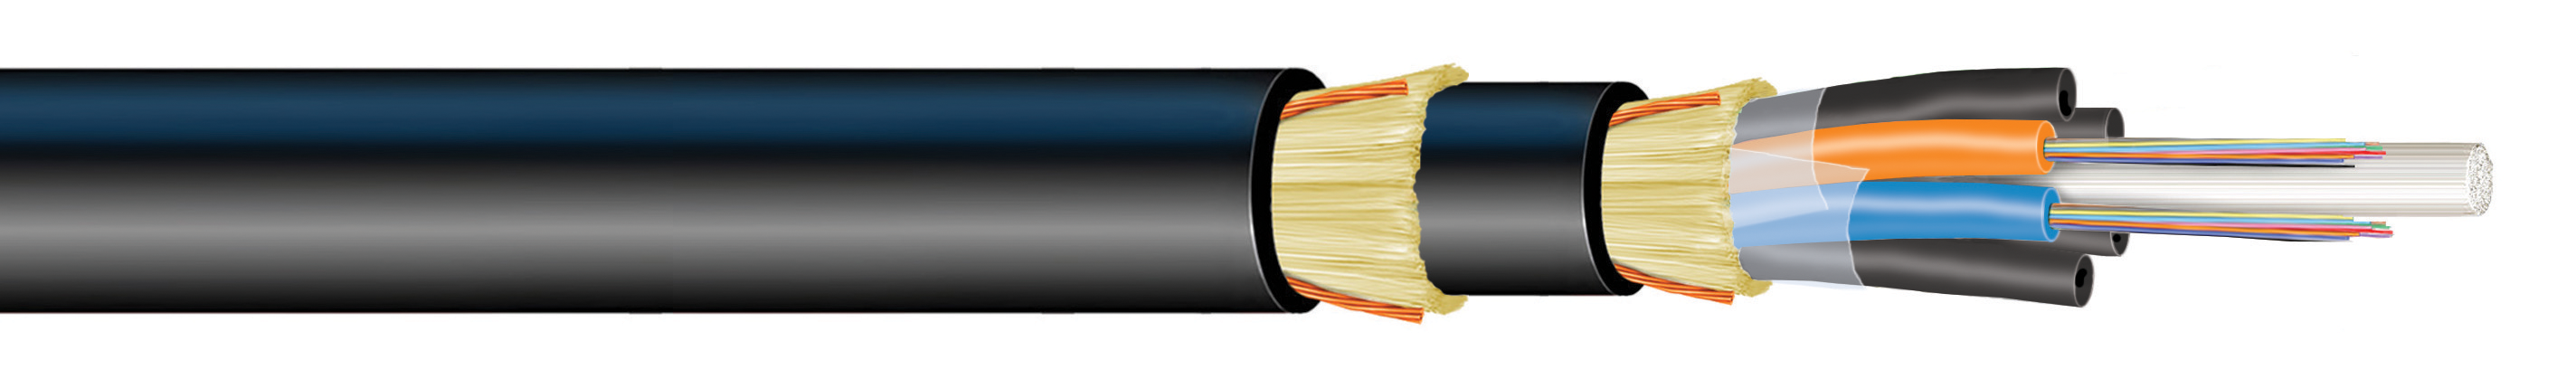 AIRGUARD® XP Harsh Environment Chemical Resistant Fiber Optic Cable (US)